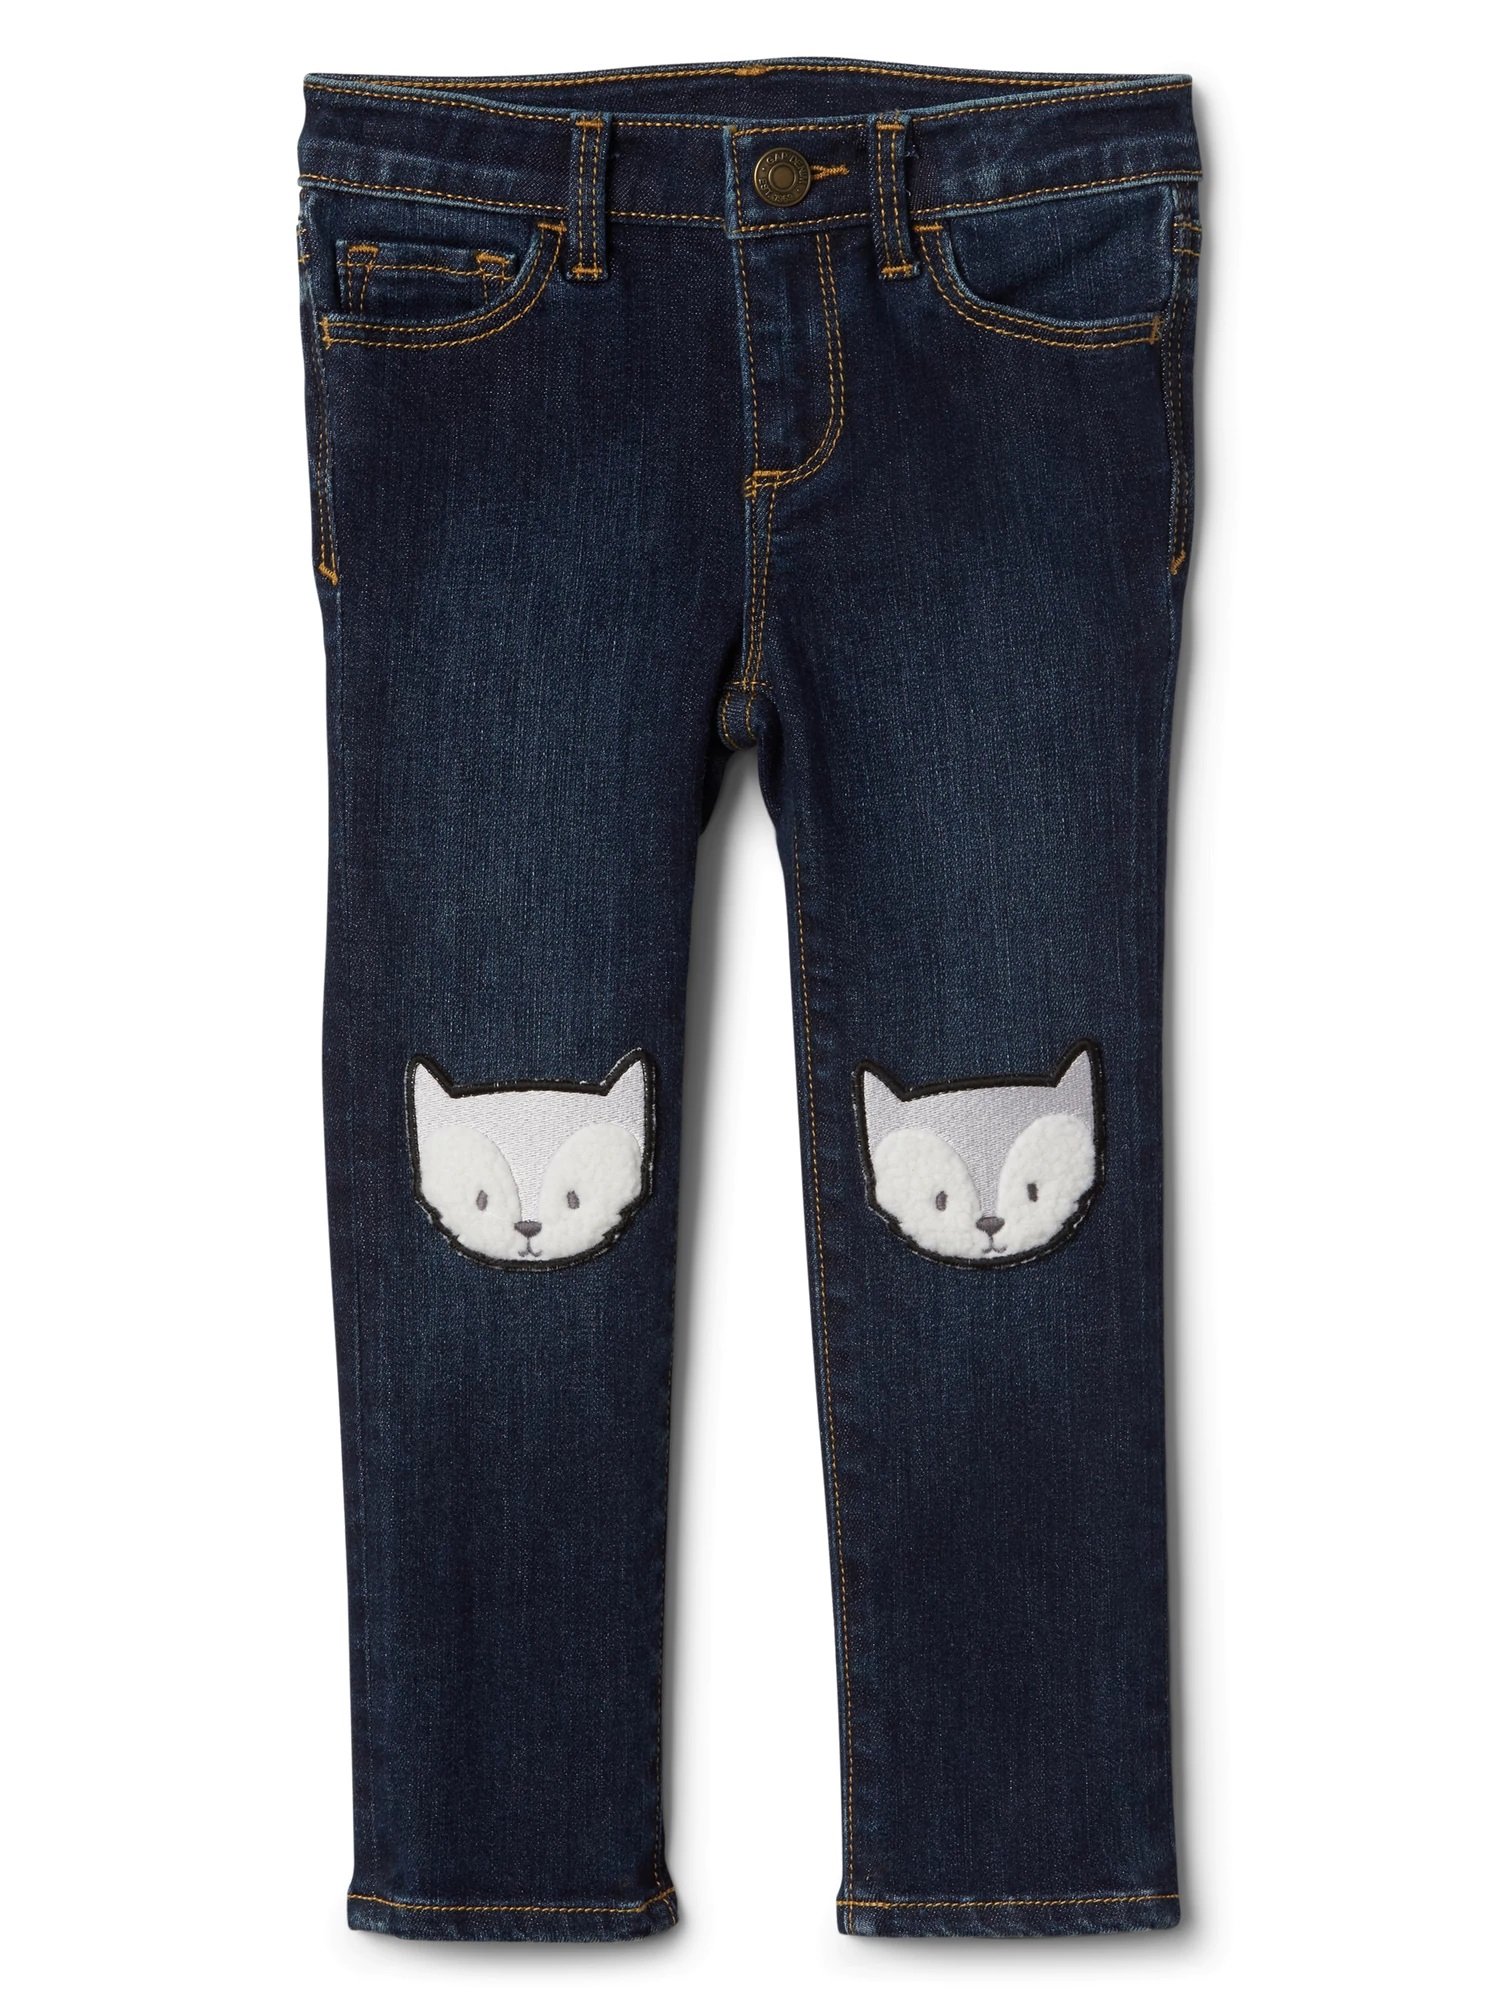 Streçli işlemeli skinny jean pantolon product image